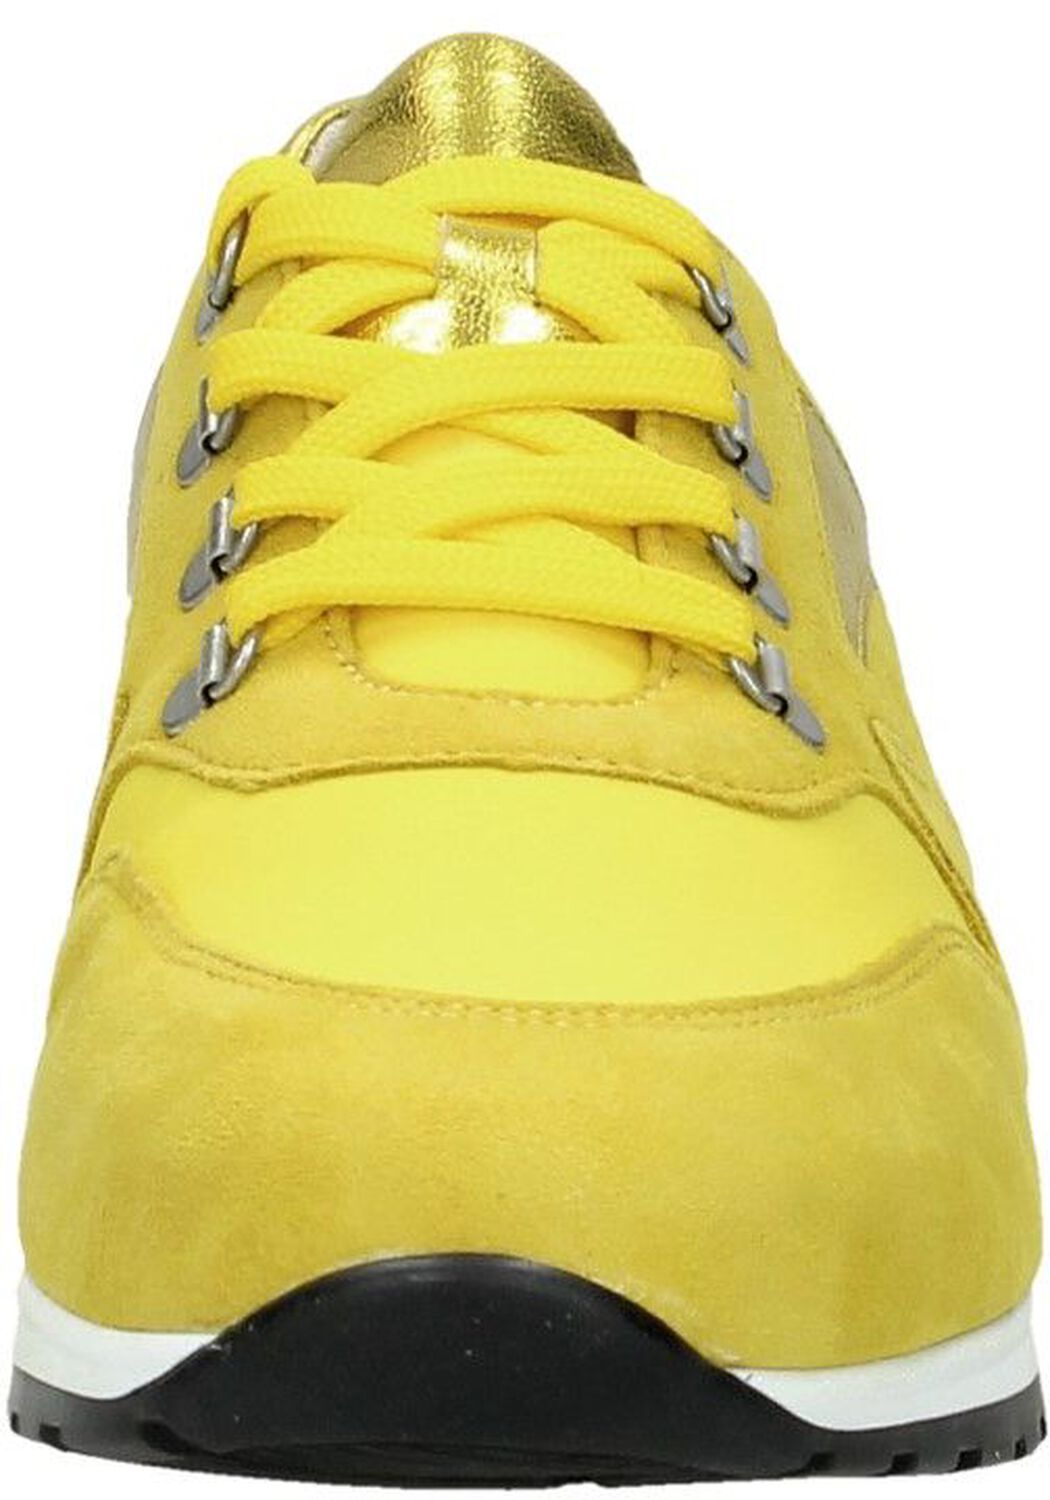 Zwart inspanning Fabriek Dames sneakers geel